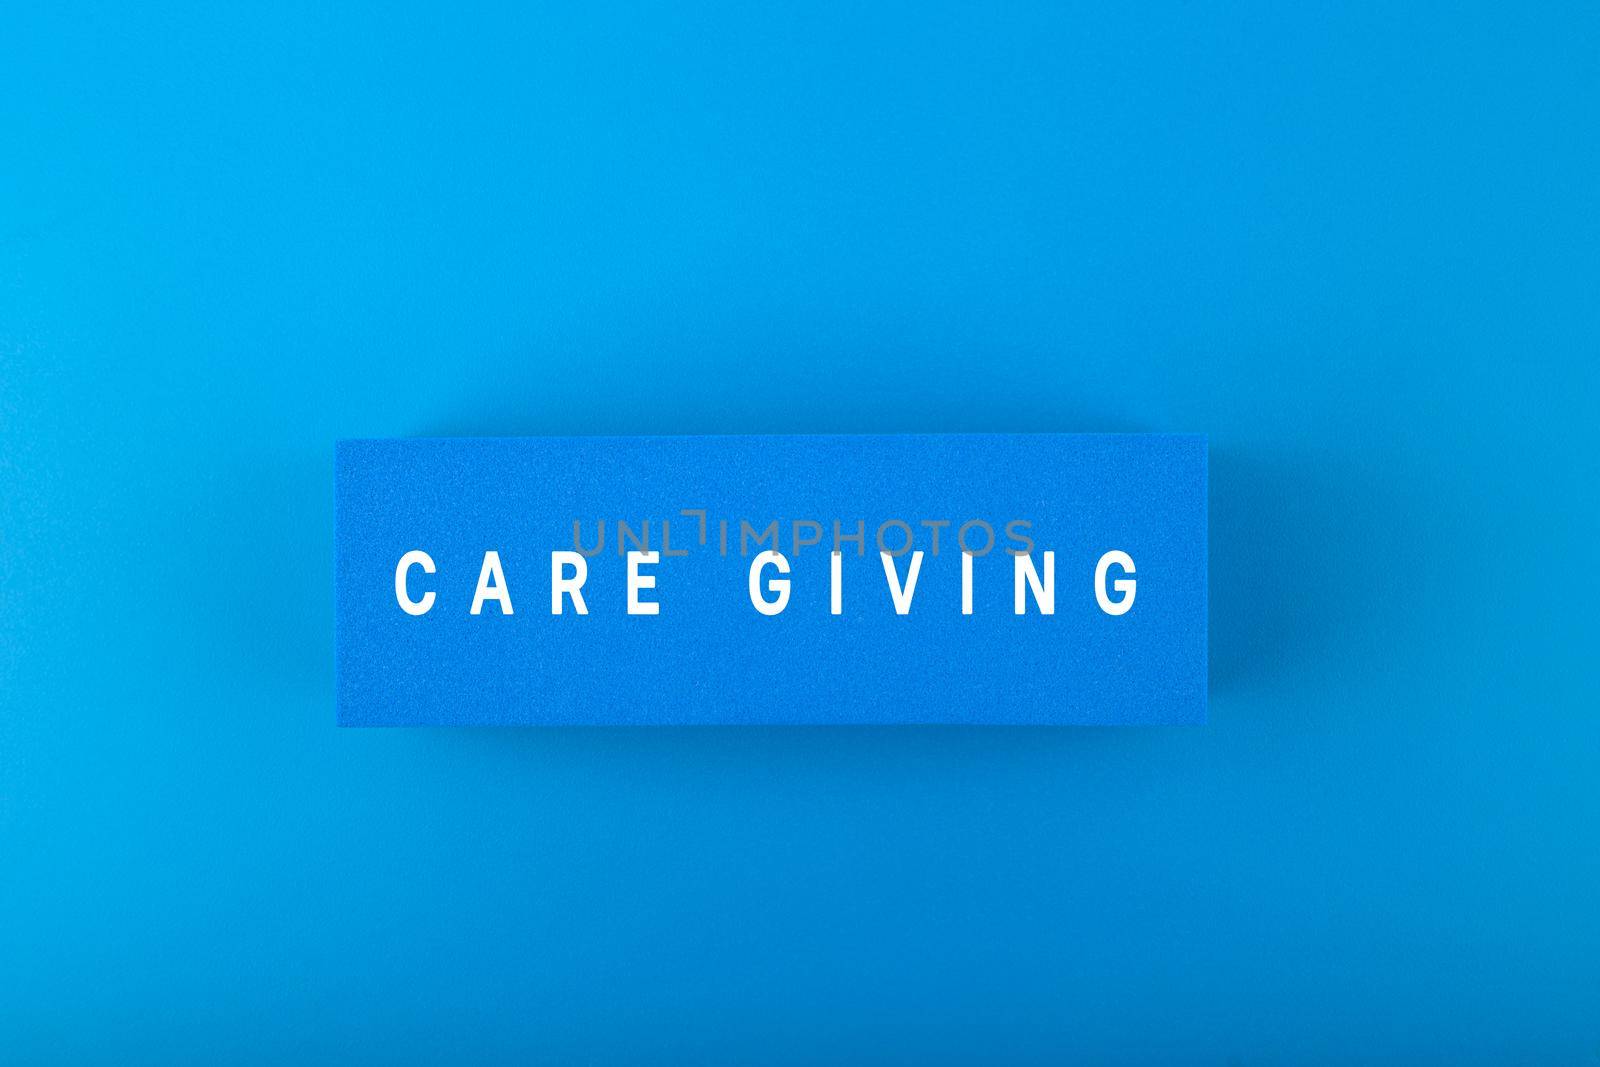 Care giving text written on blue rectangular against blue background by Senorina_Irina